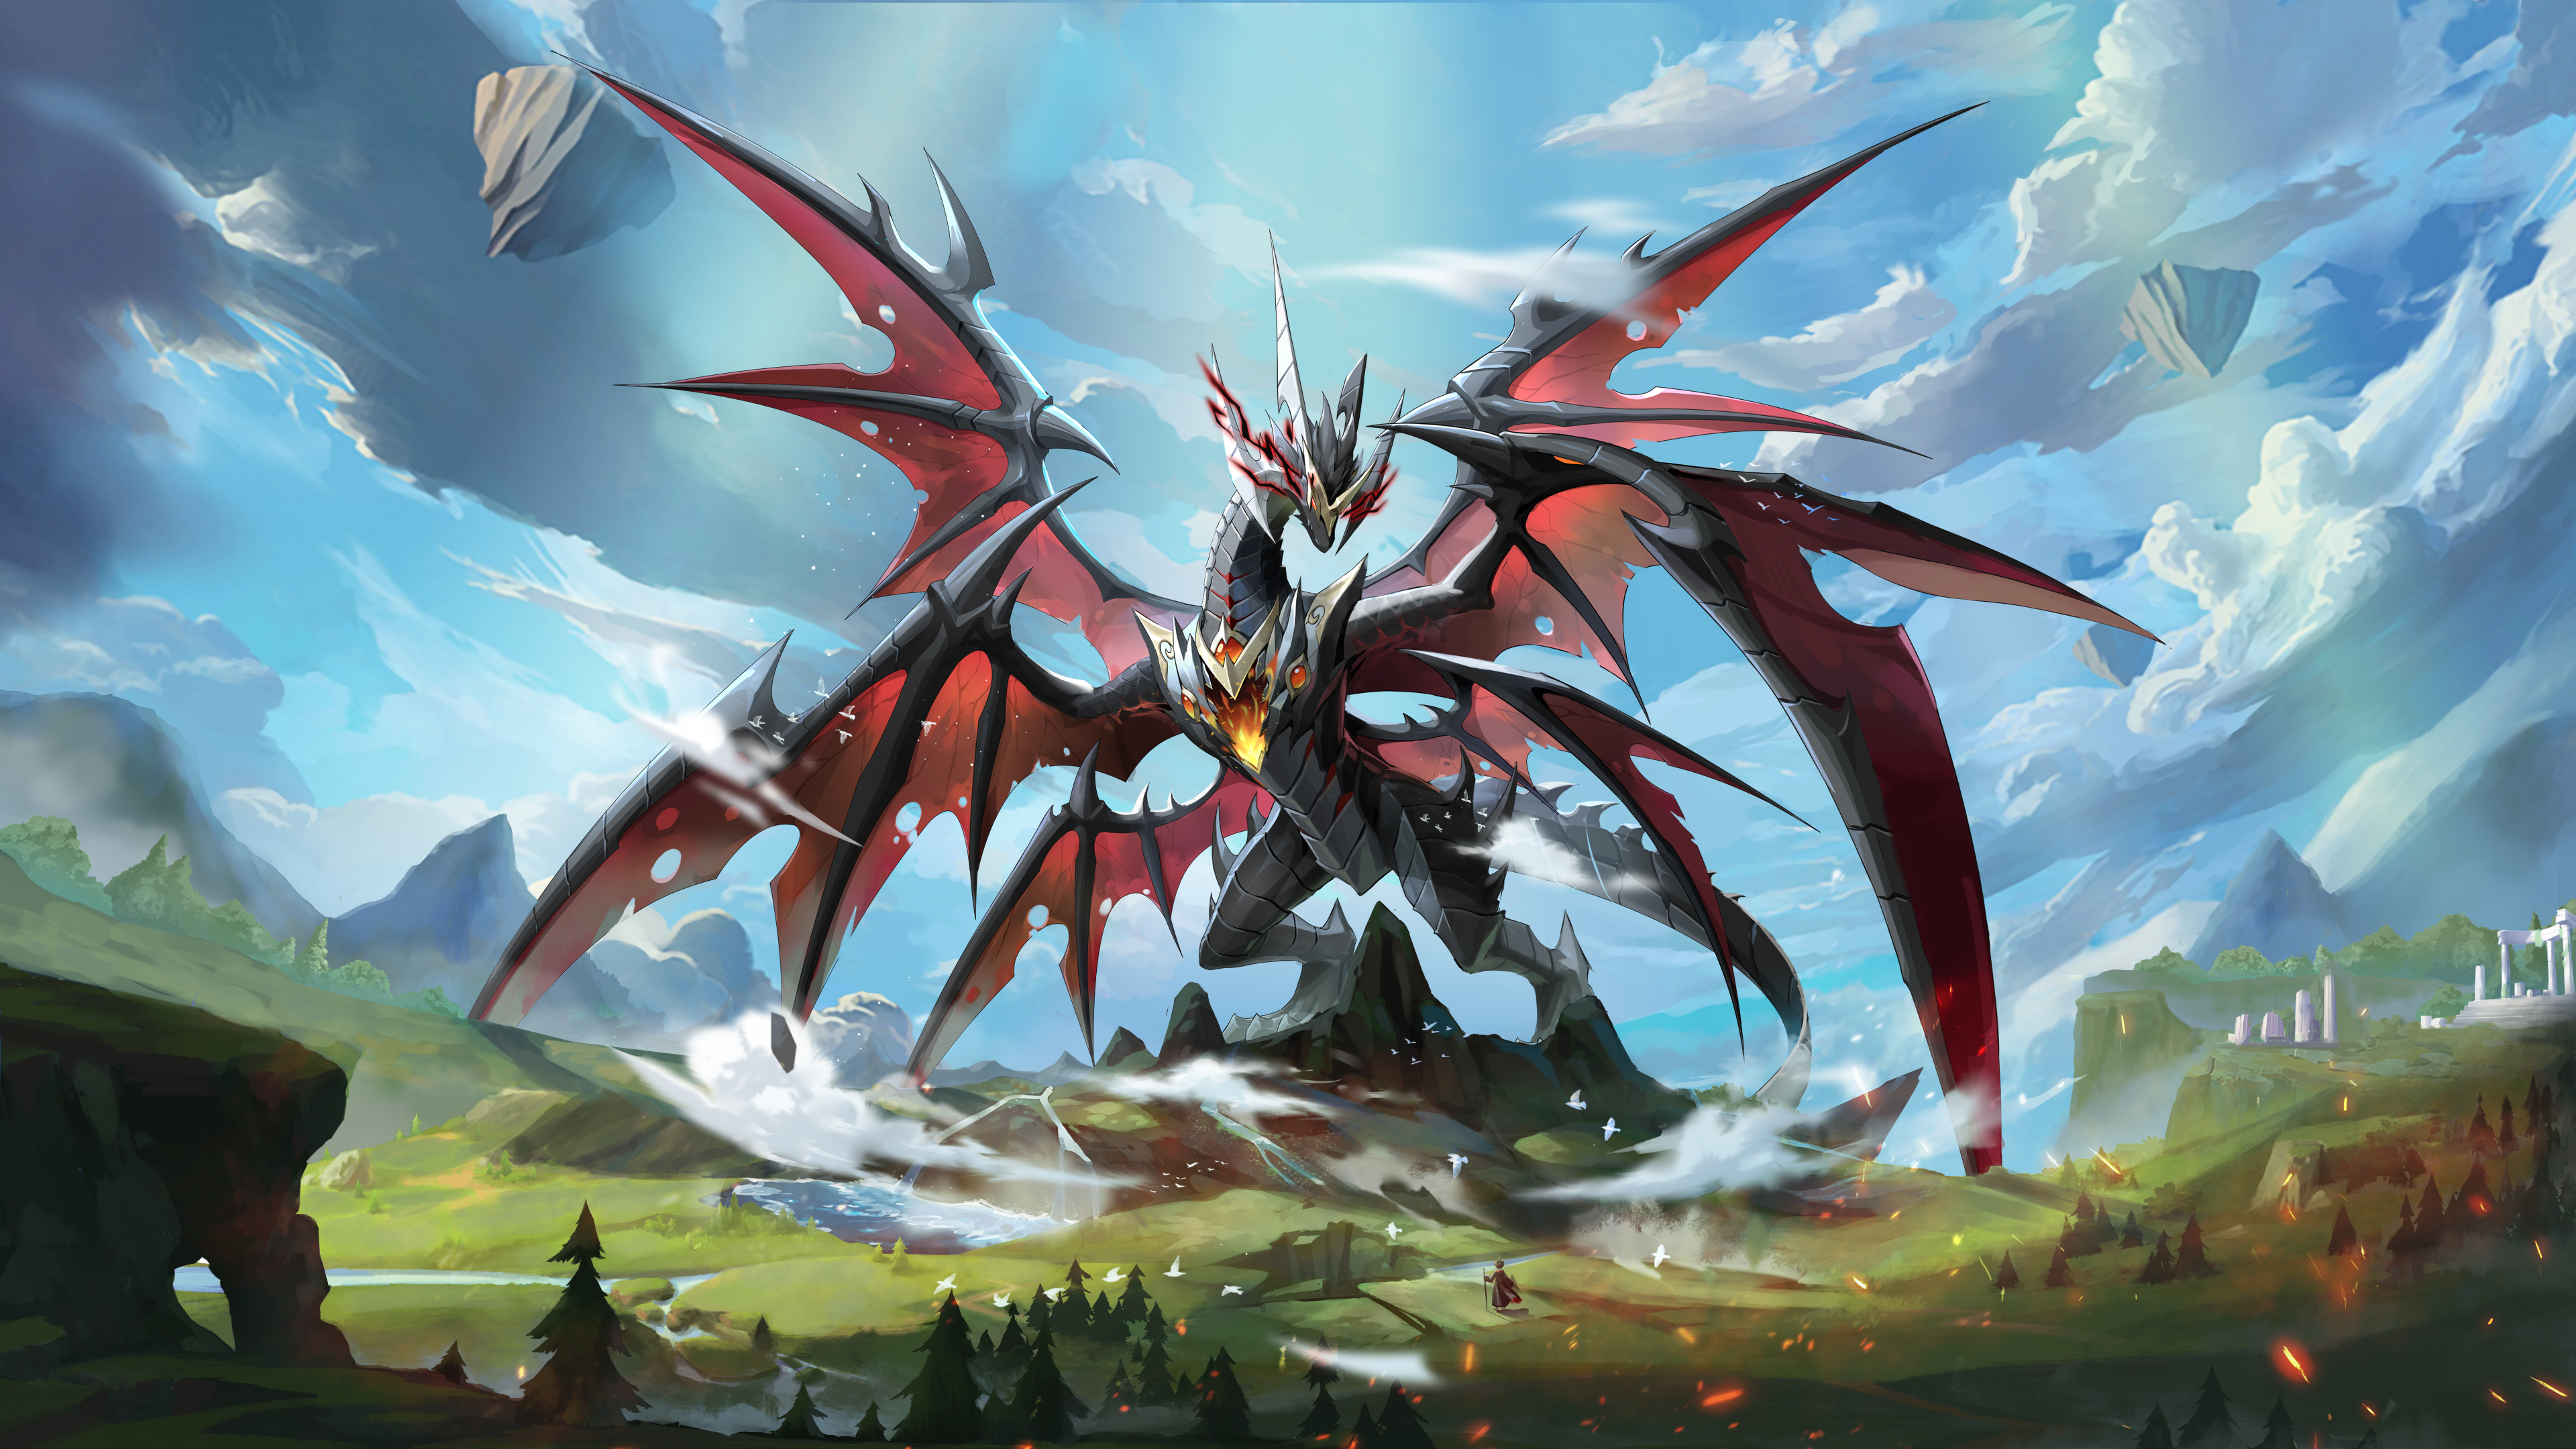 Anime 3840x2160 anime creatures artwork dragon wings clouds ao qi chuan shuo giant sky trees creature